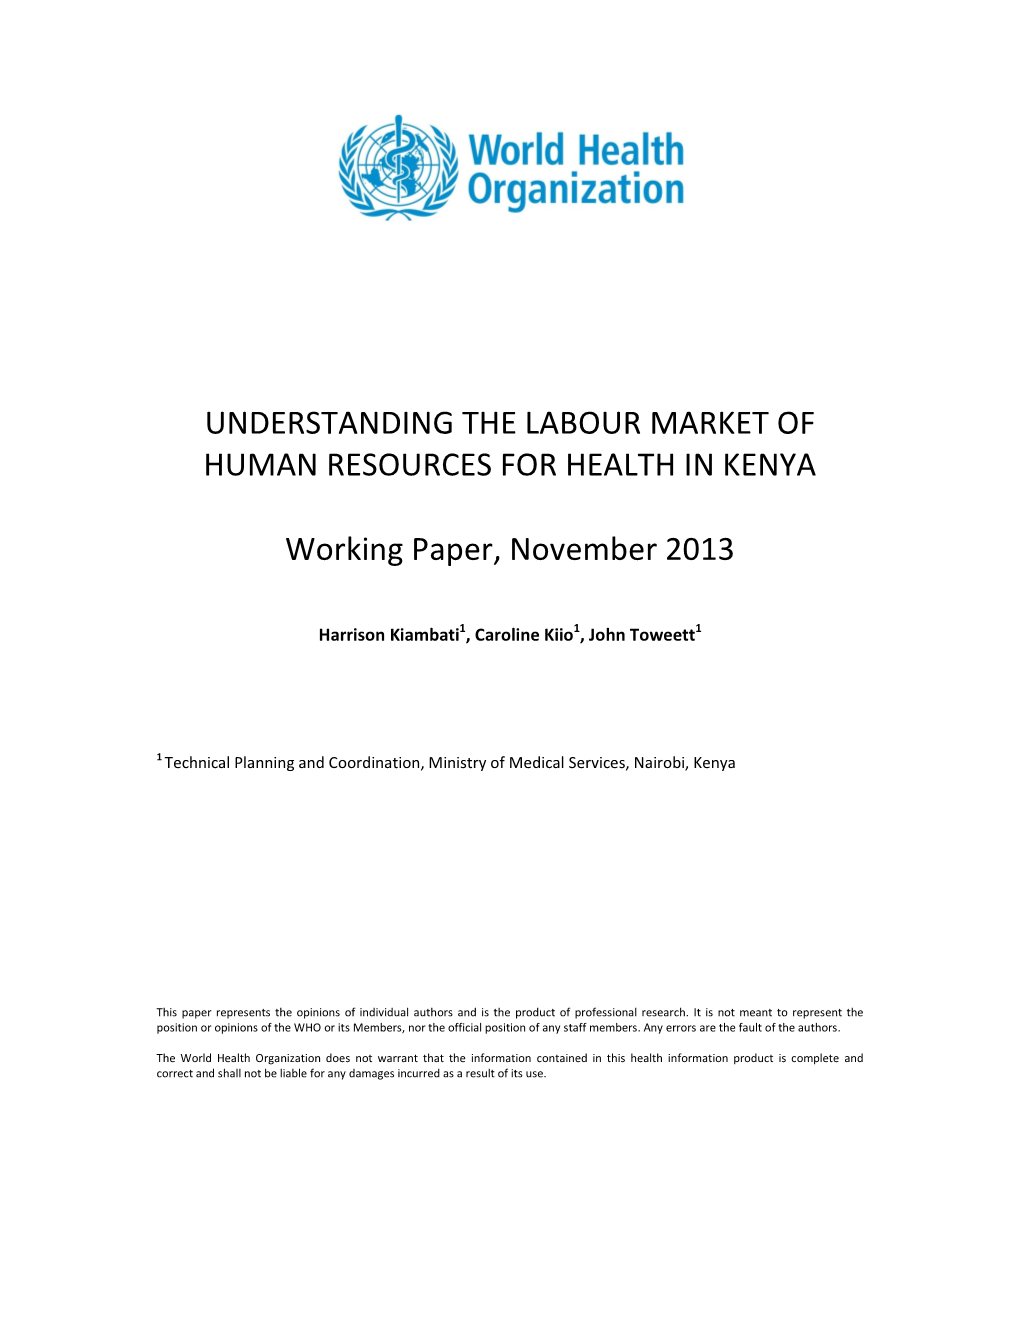 Understanding the Labour Market of Human Resources for Health in Kenya